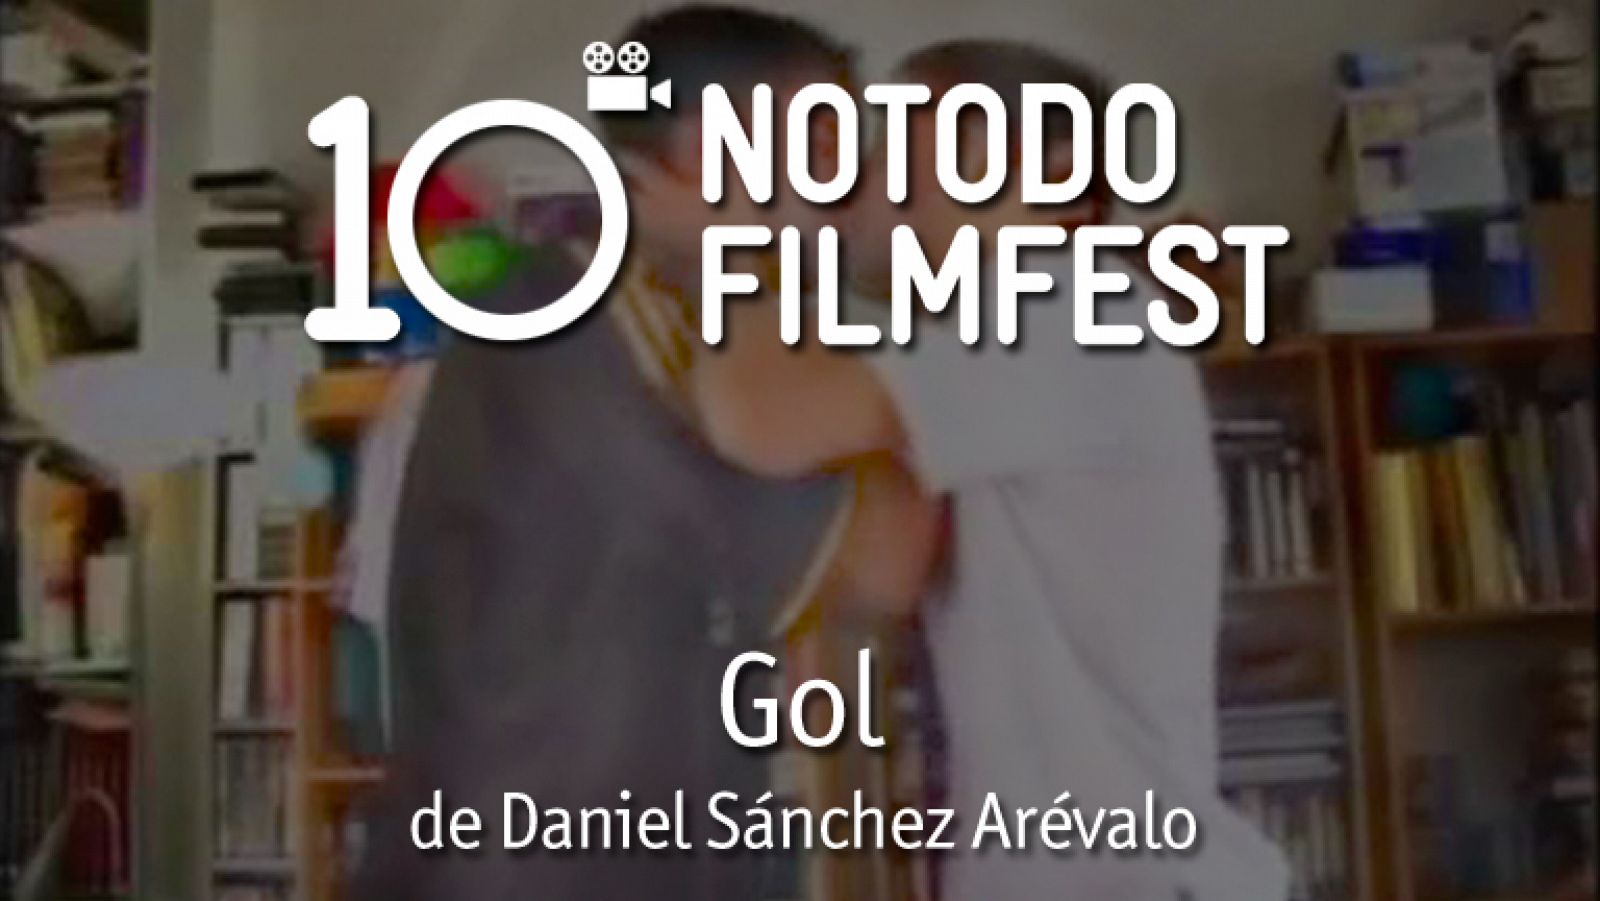 Gol - Daniel Sánchez Arévalo (2002)